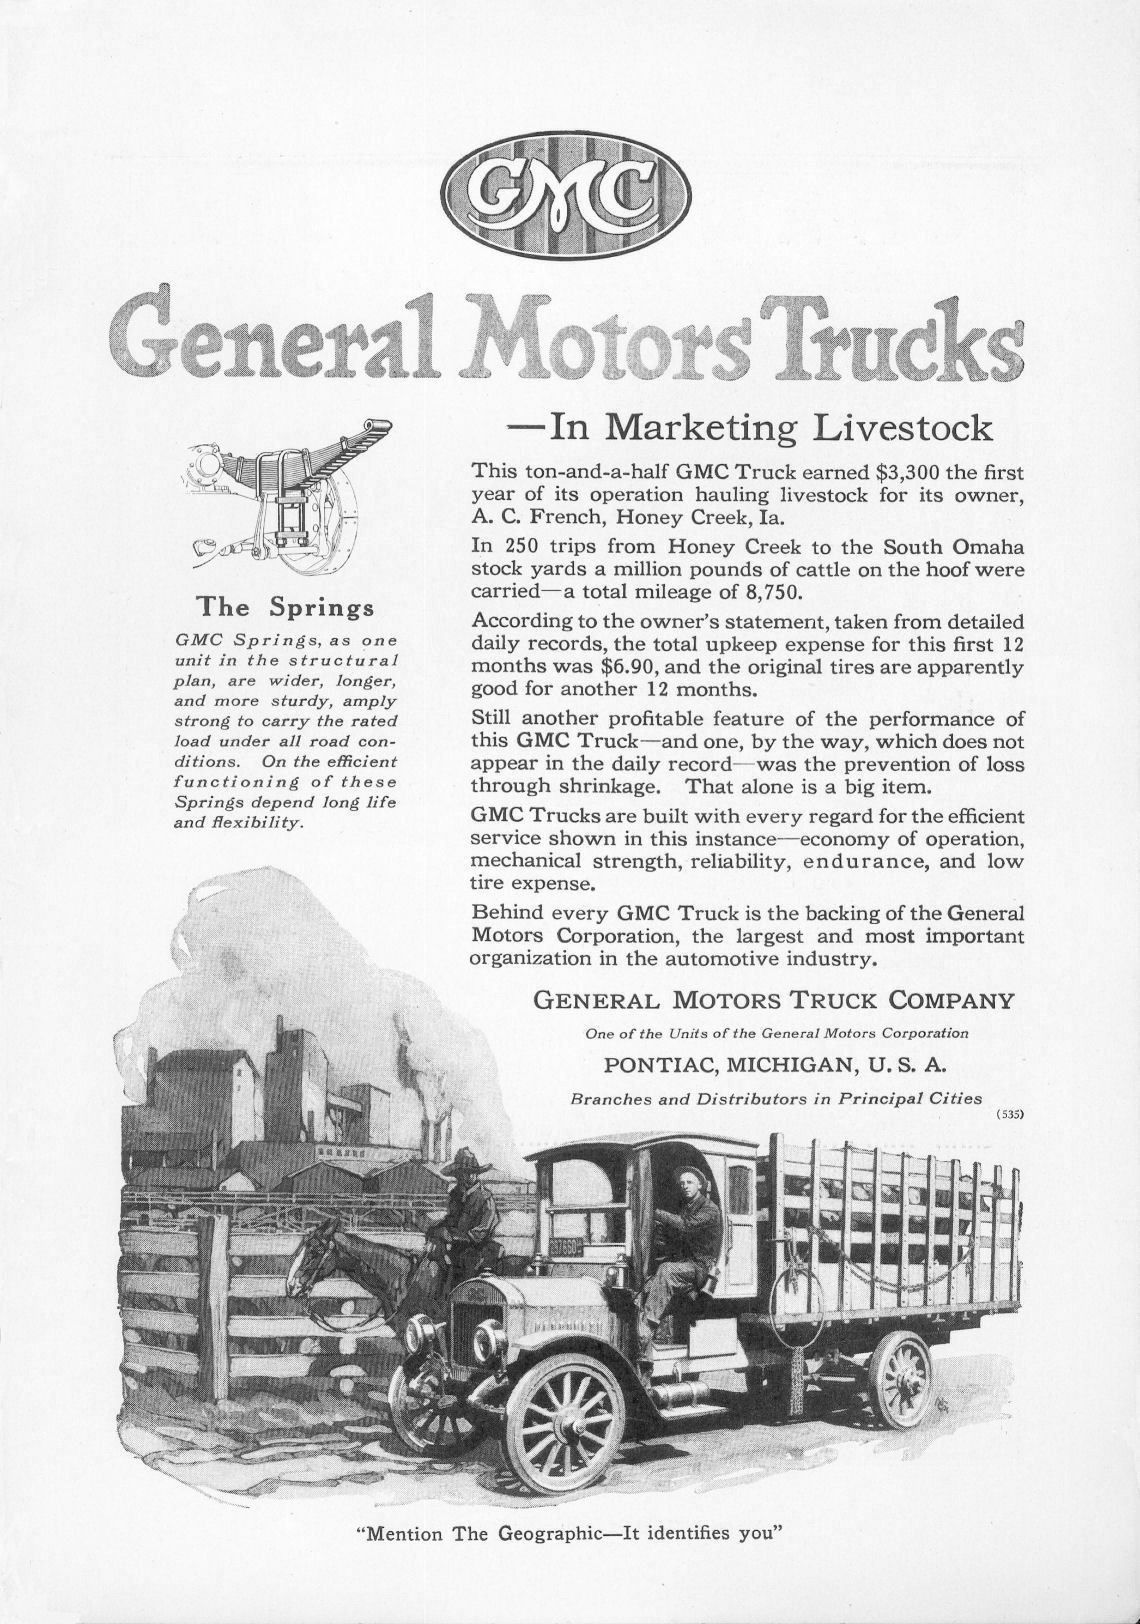 1919 GMC General Motors Trucks - In Marketing Livestock